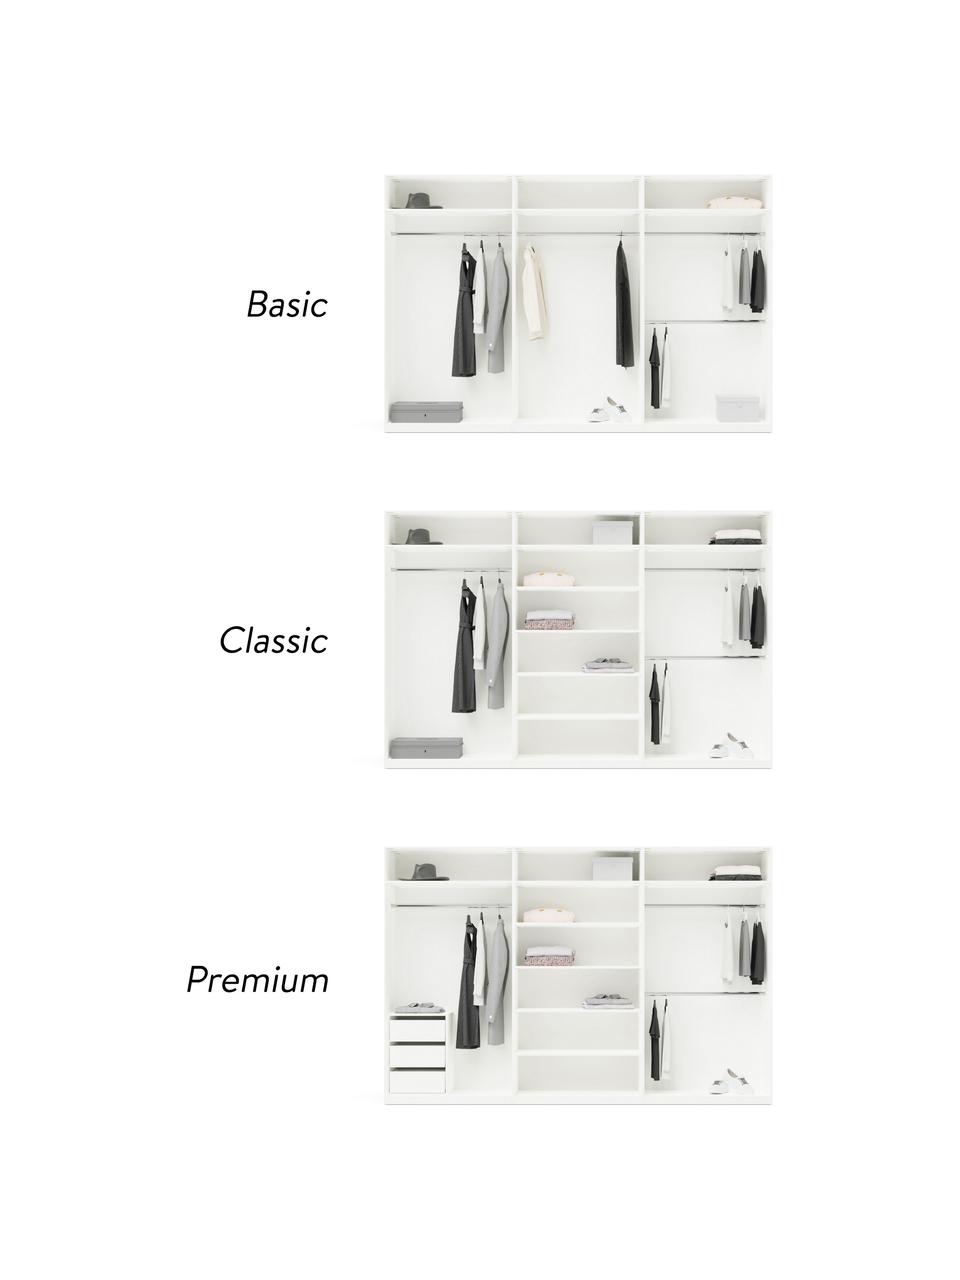 Modulární skříň s otočnými dveřmi Simone, šířka 300 cm, více variant, Dřevo, béžová, Interiér Classic, výška 236 cm